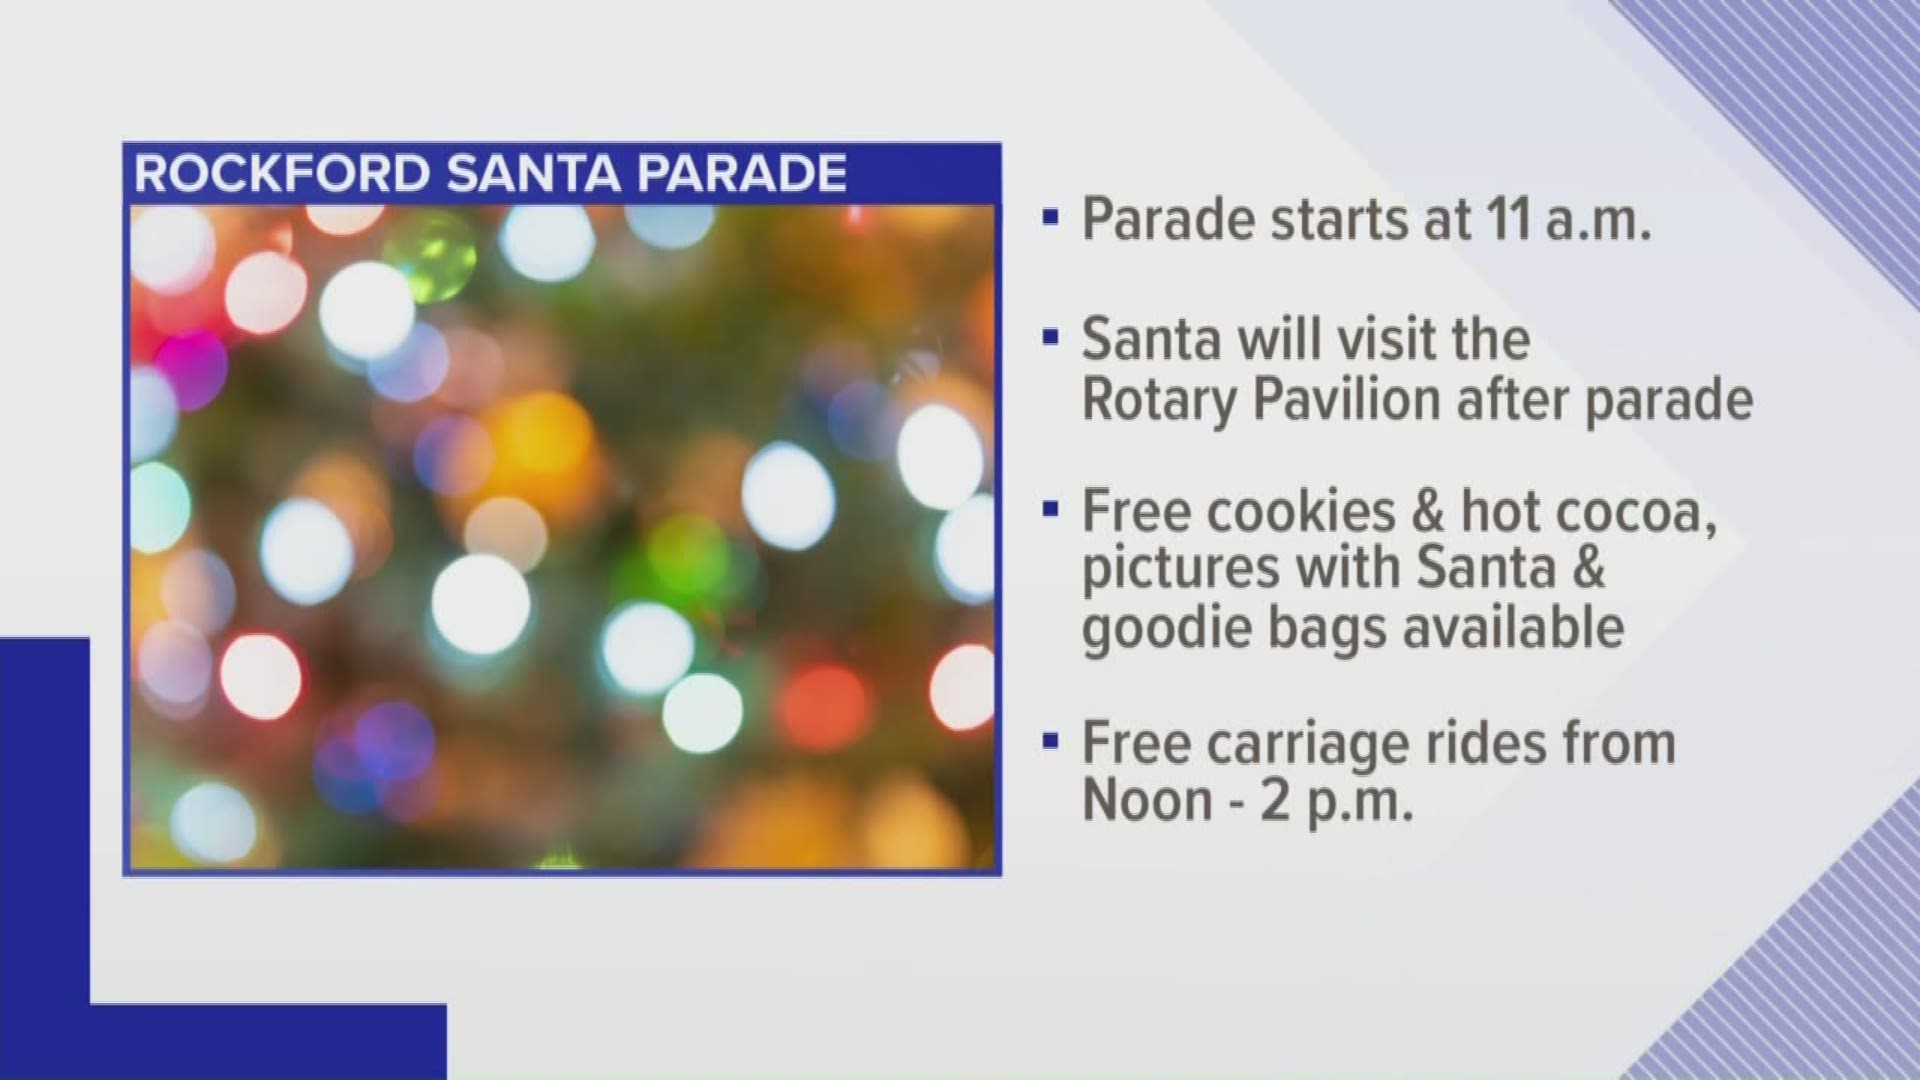 Santa is paying Rockford a visit Saturday. The Santa Parade starts at 11 a.m. There will be photos with Santa, cocoa, carriage rides and free goodie bags!